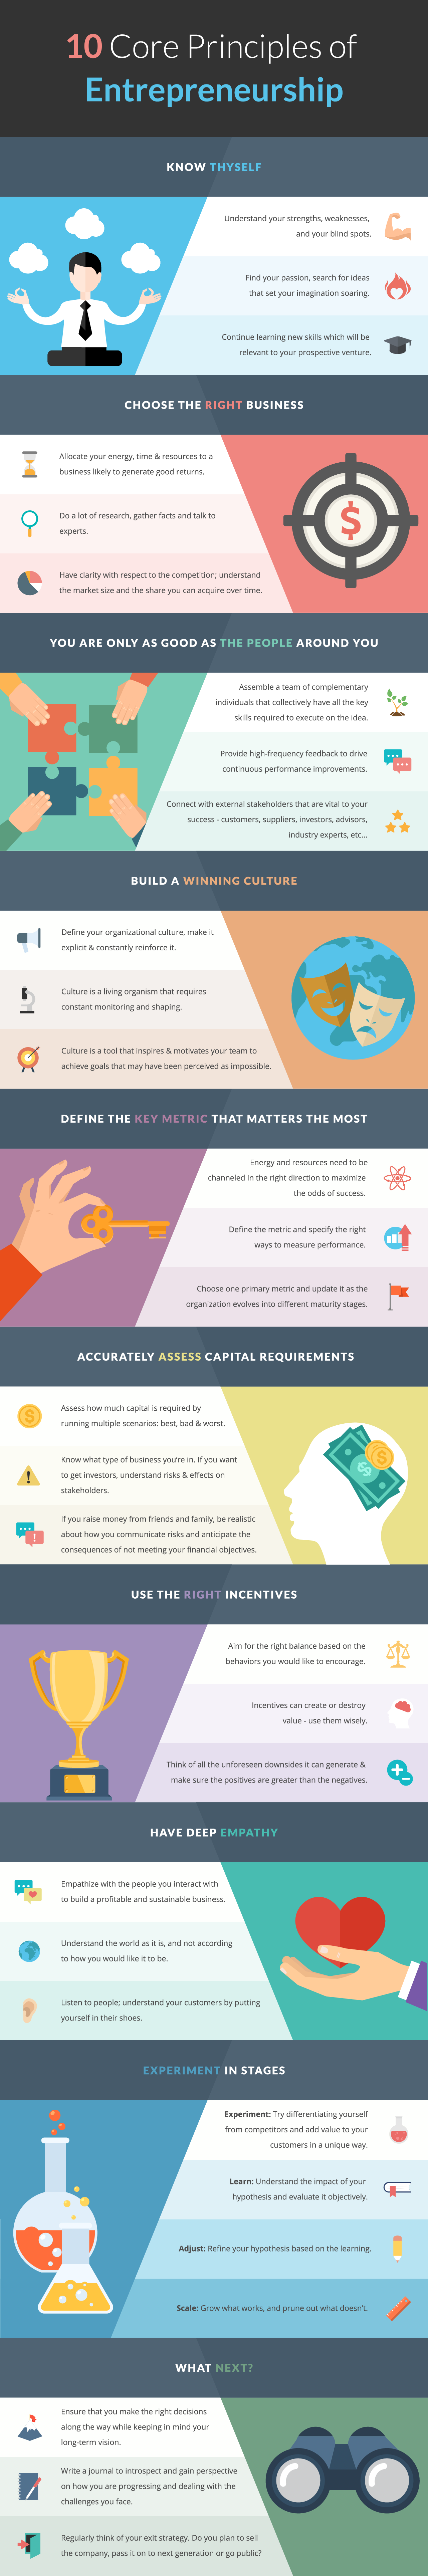 10 Core Principles of Entrepreneurship Infographic